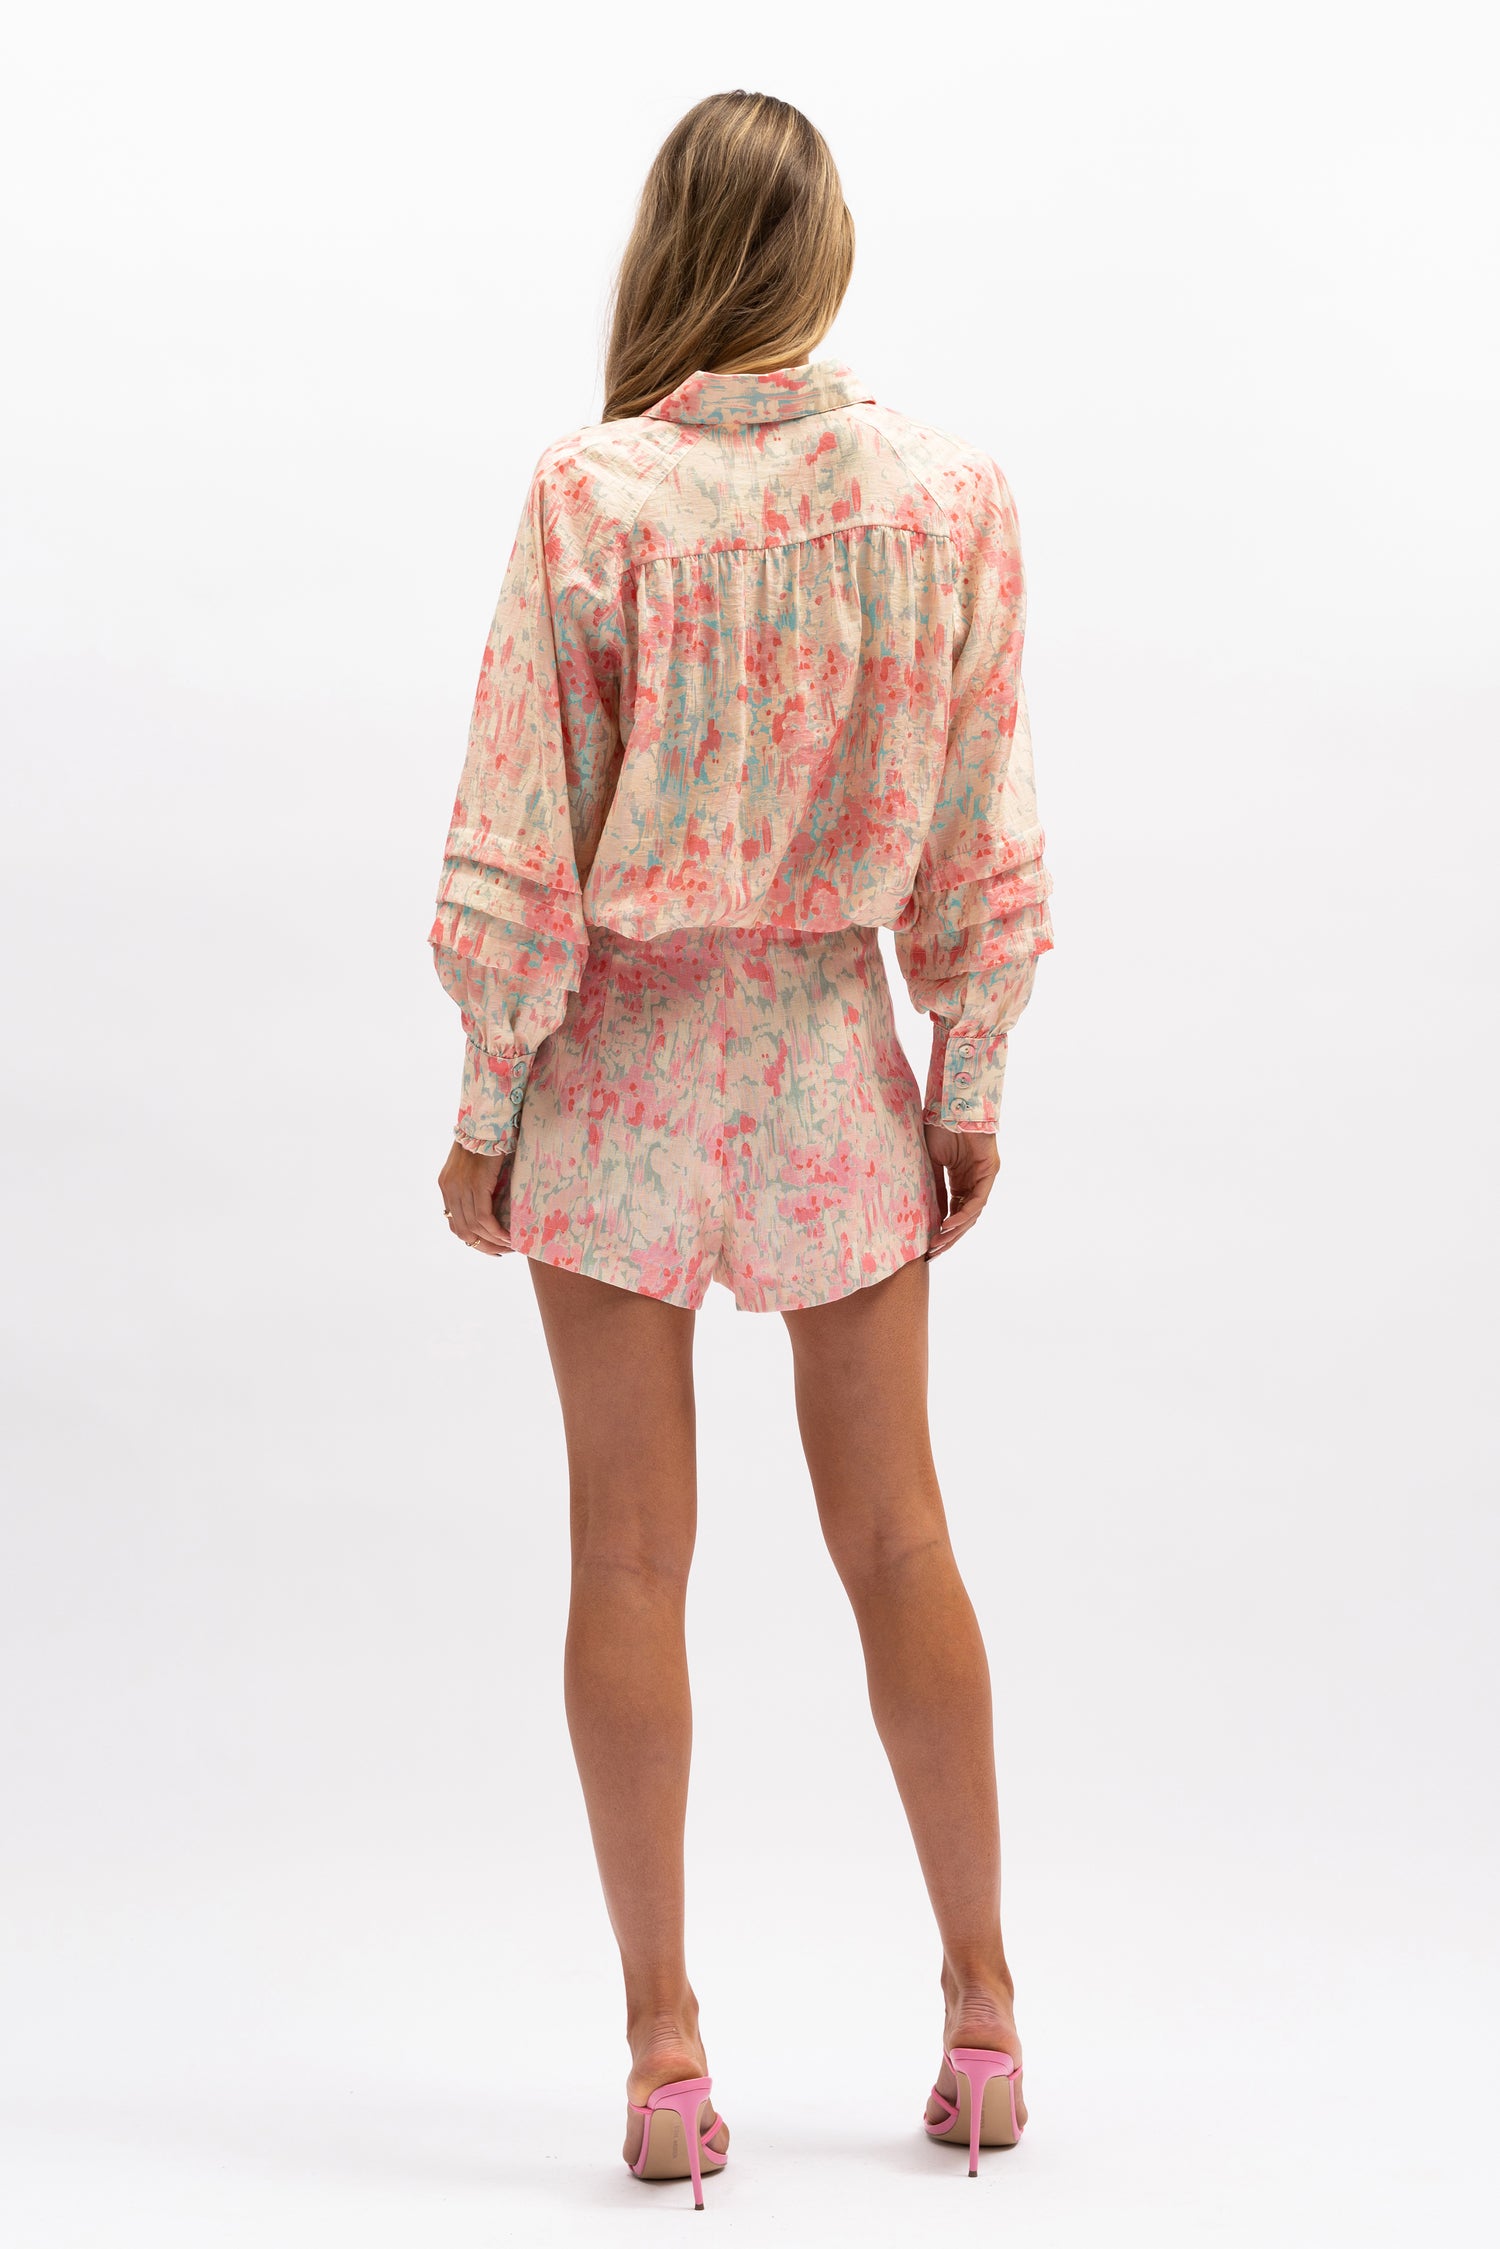 Harper Blouse - Summer Meadow - pink/ white puff sleeve shirt - Aureta